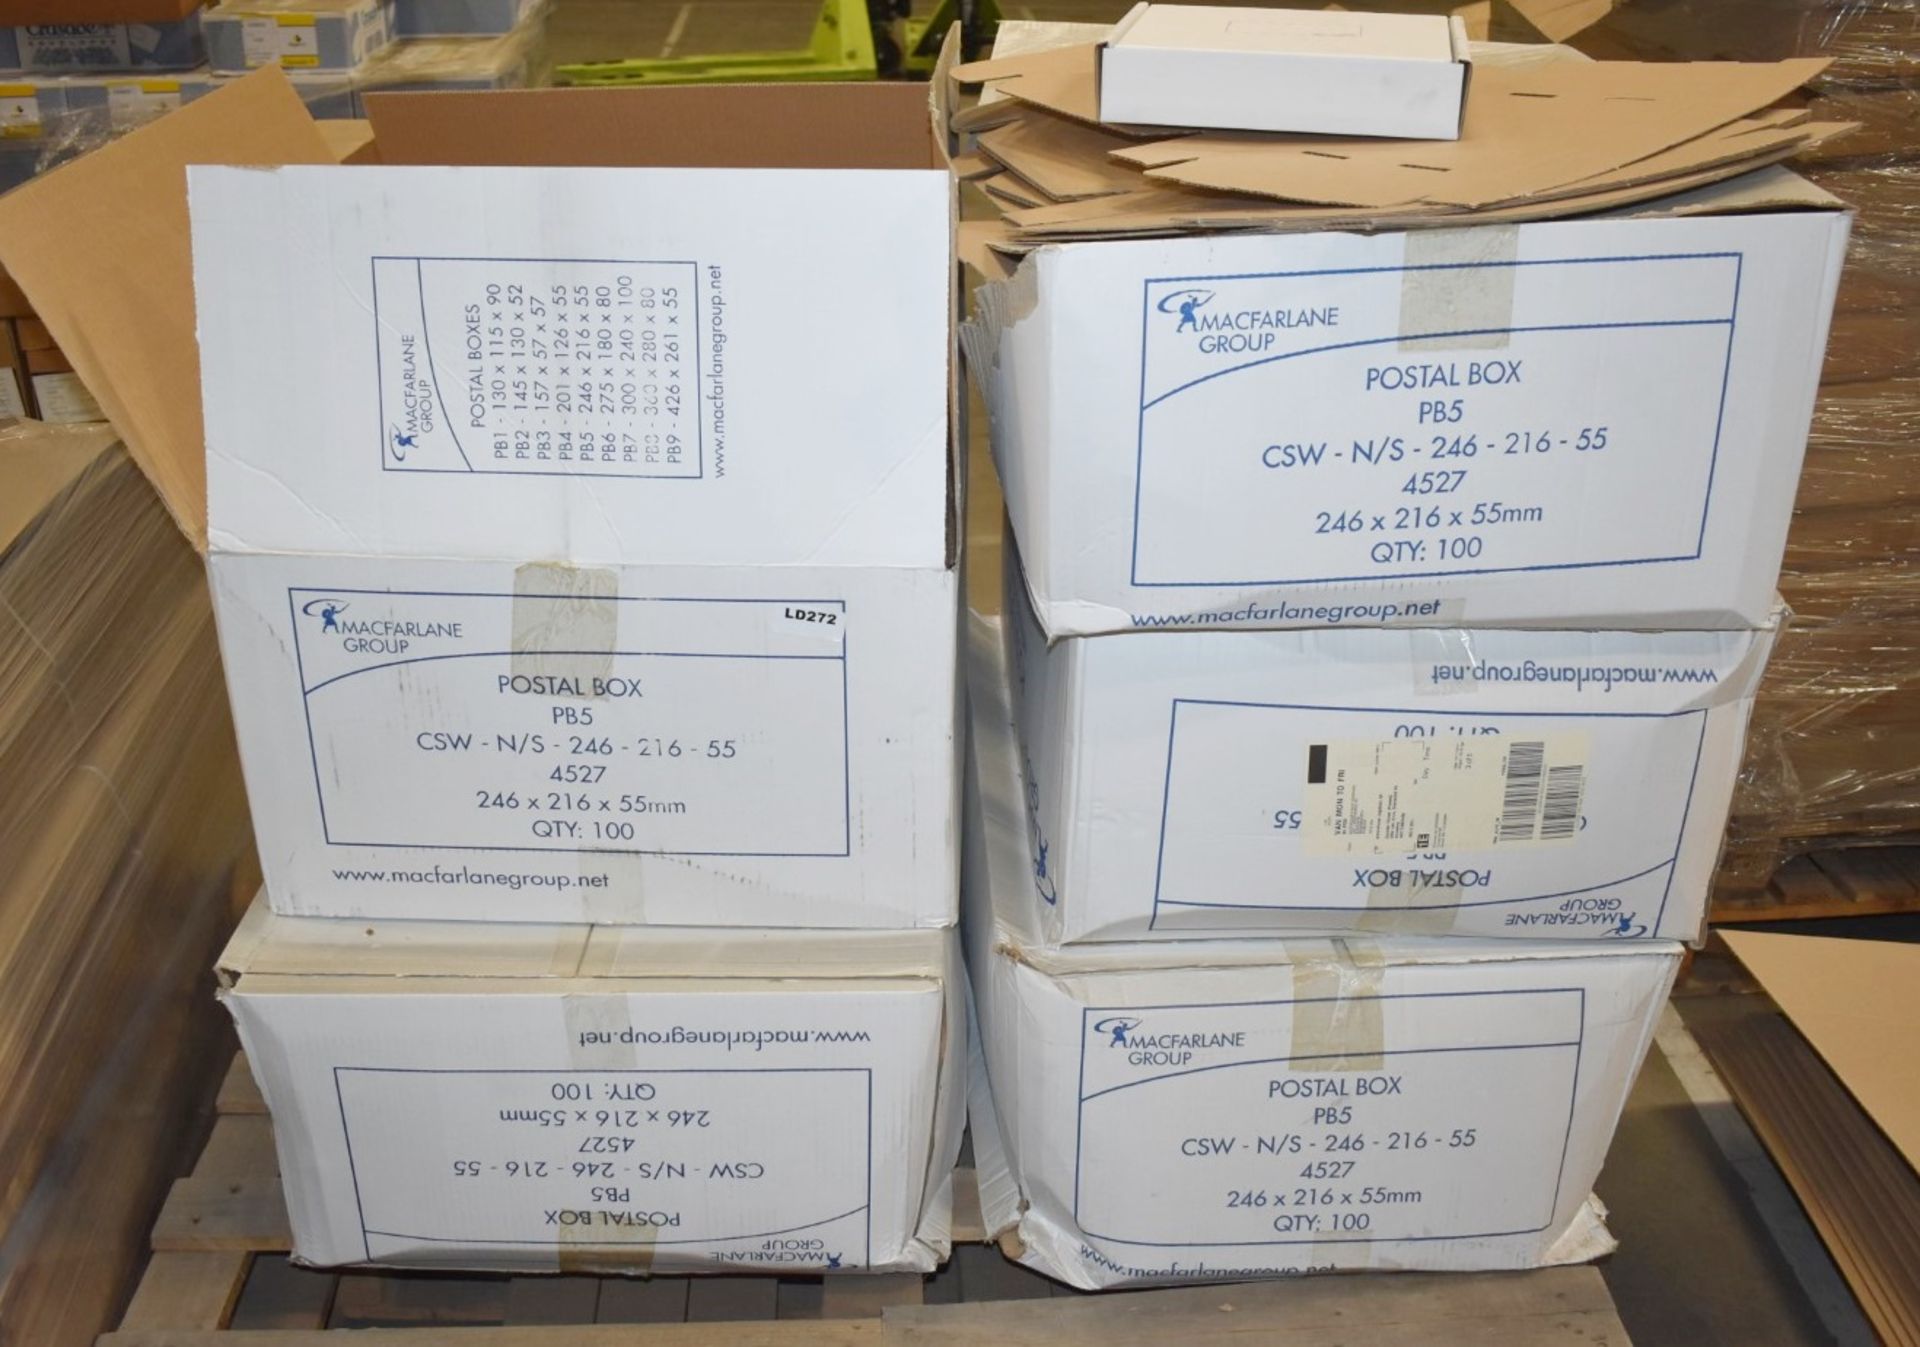 5 x Packs PB5 Cardboard Postal Boxes - 246x216x55mm - Ref LD272 - CL480 - Location: Nottingham